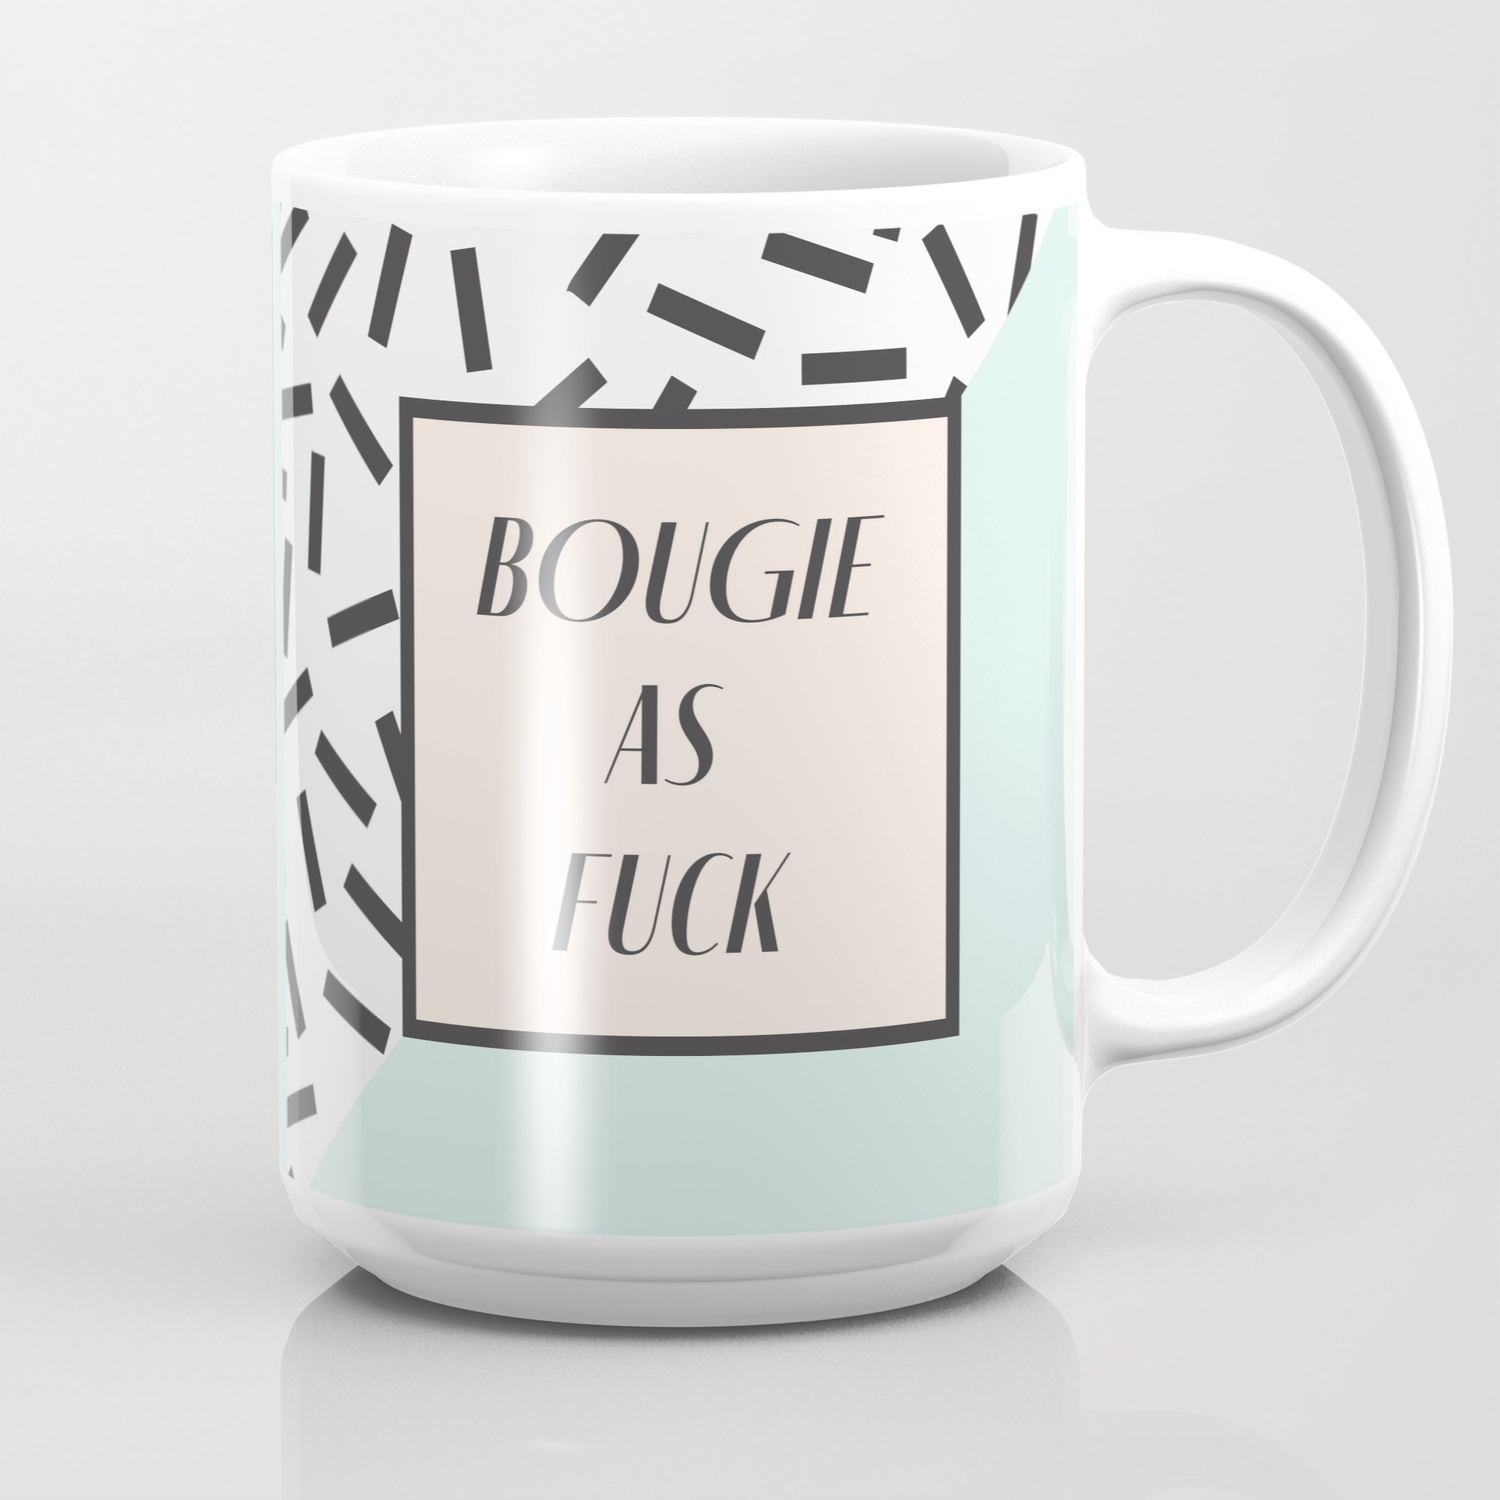 Bougie As Fuck Coffee Mug by I Need Color | Society6